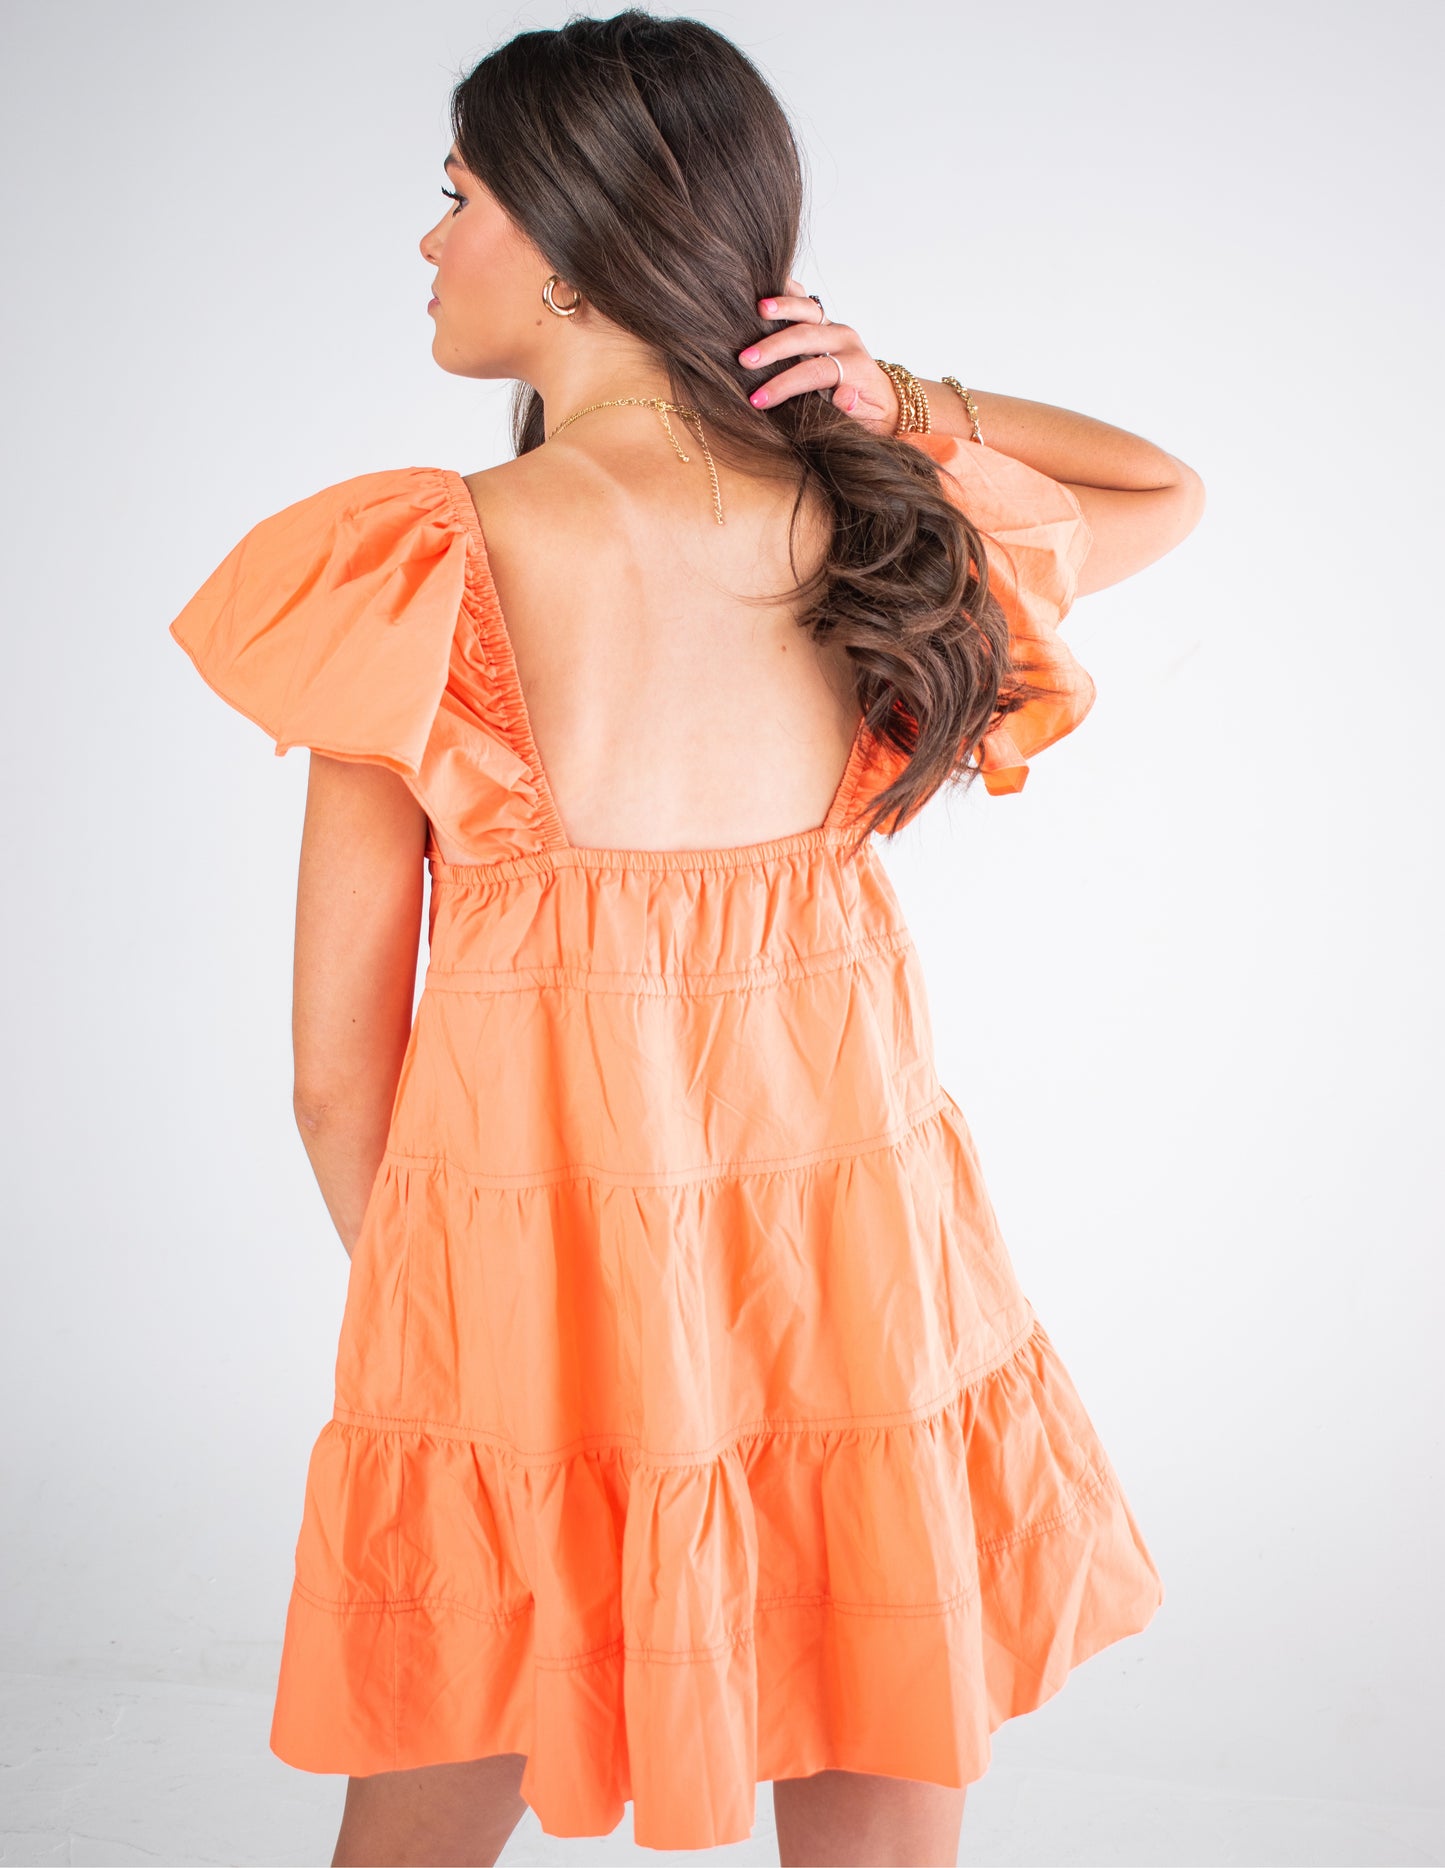 Sunkist Orange Ruffle Dress